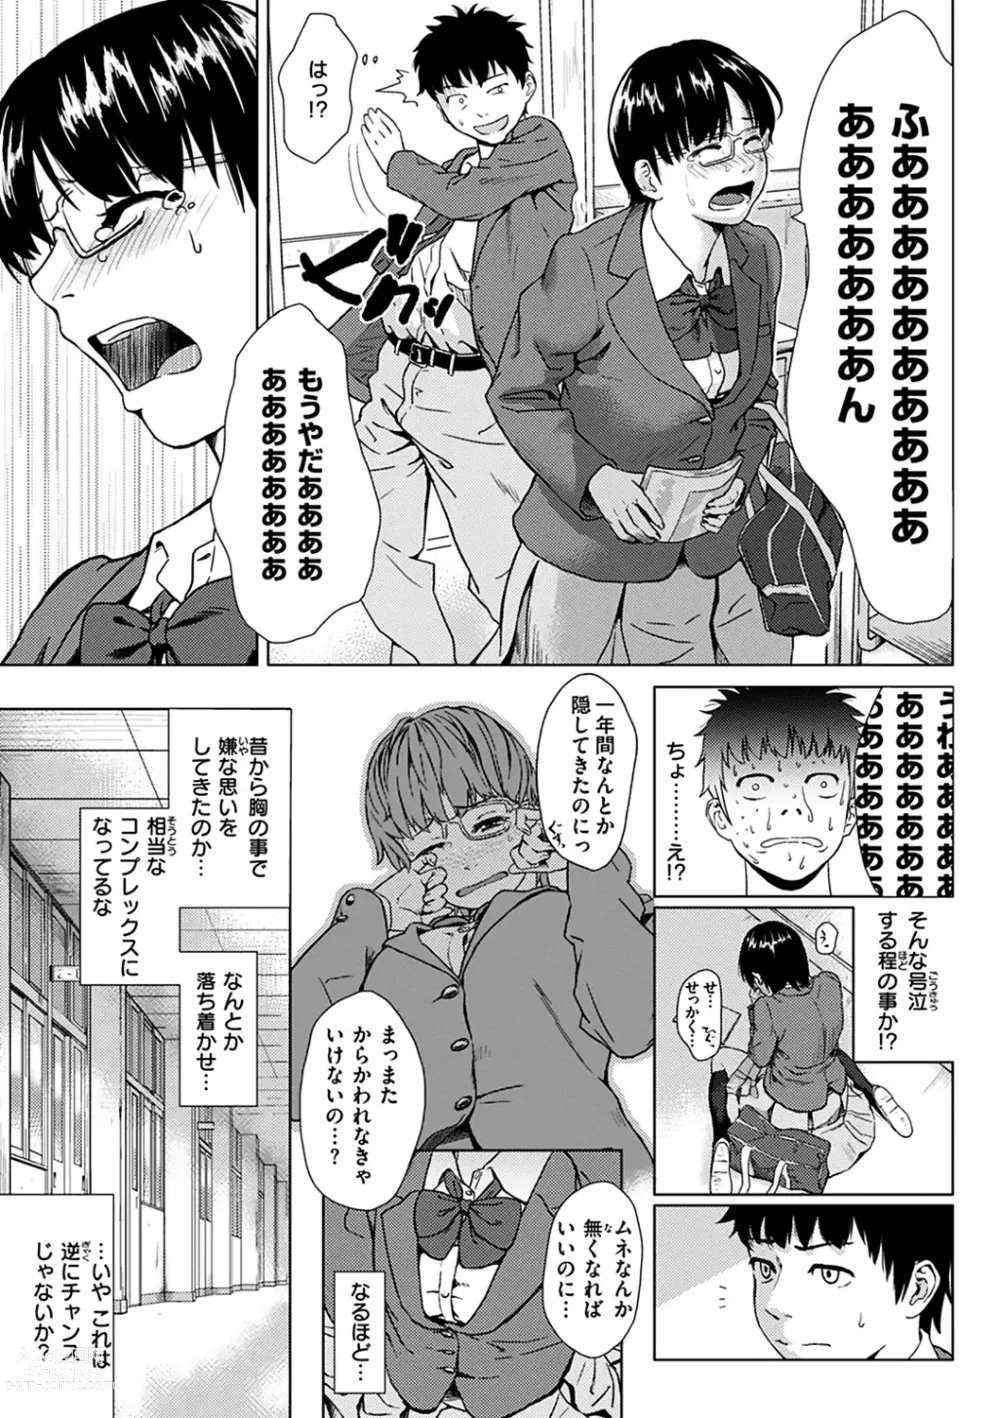 Page 11 of manga Kimi dake ni - I Only Love You...